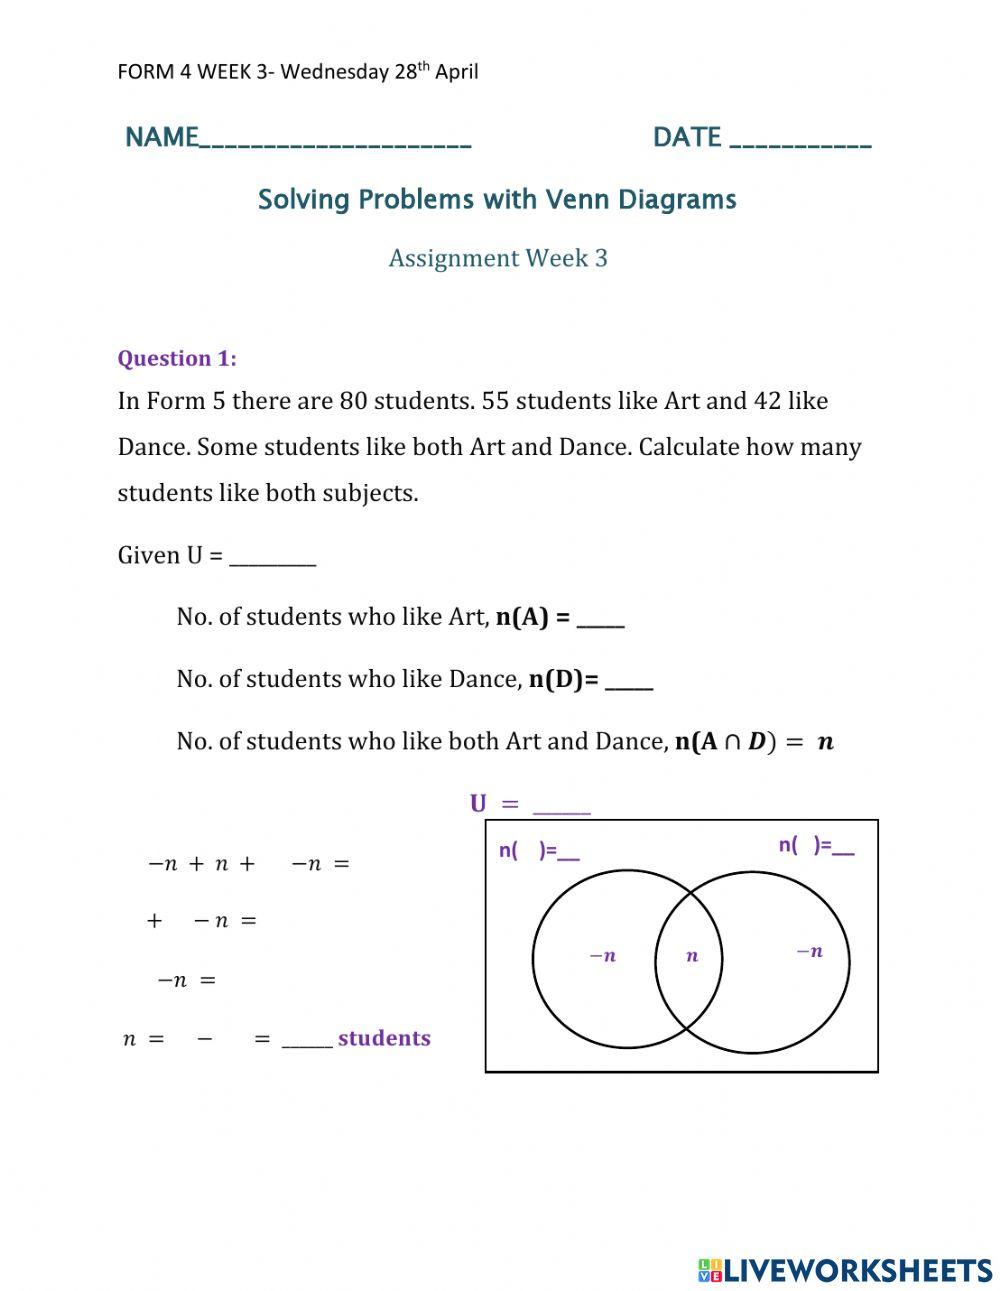 Solving Problems with Venn Diagrams Q1